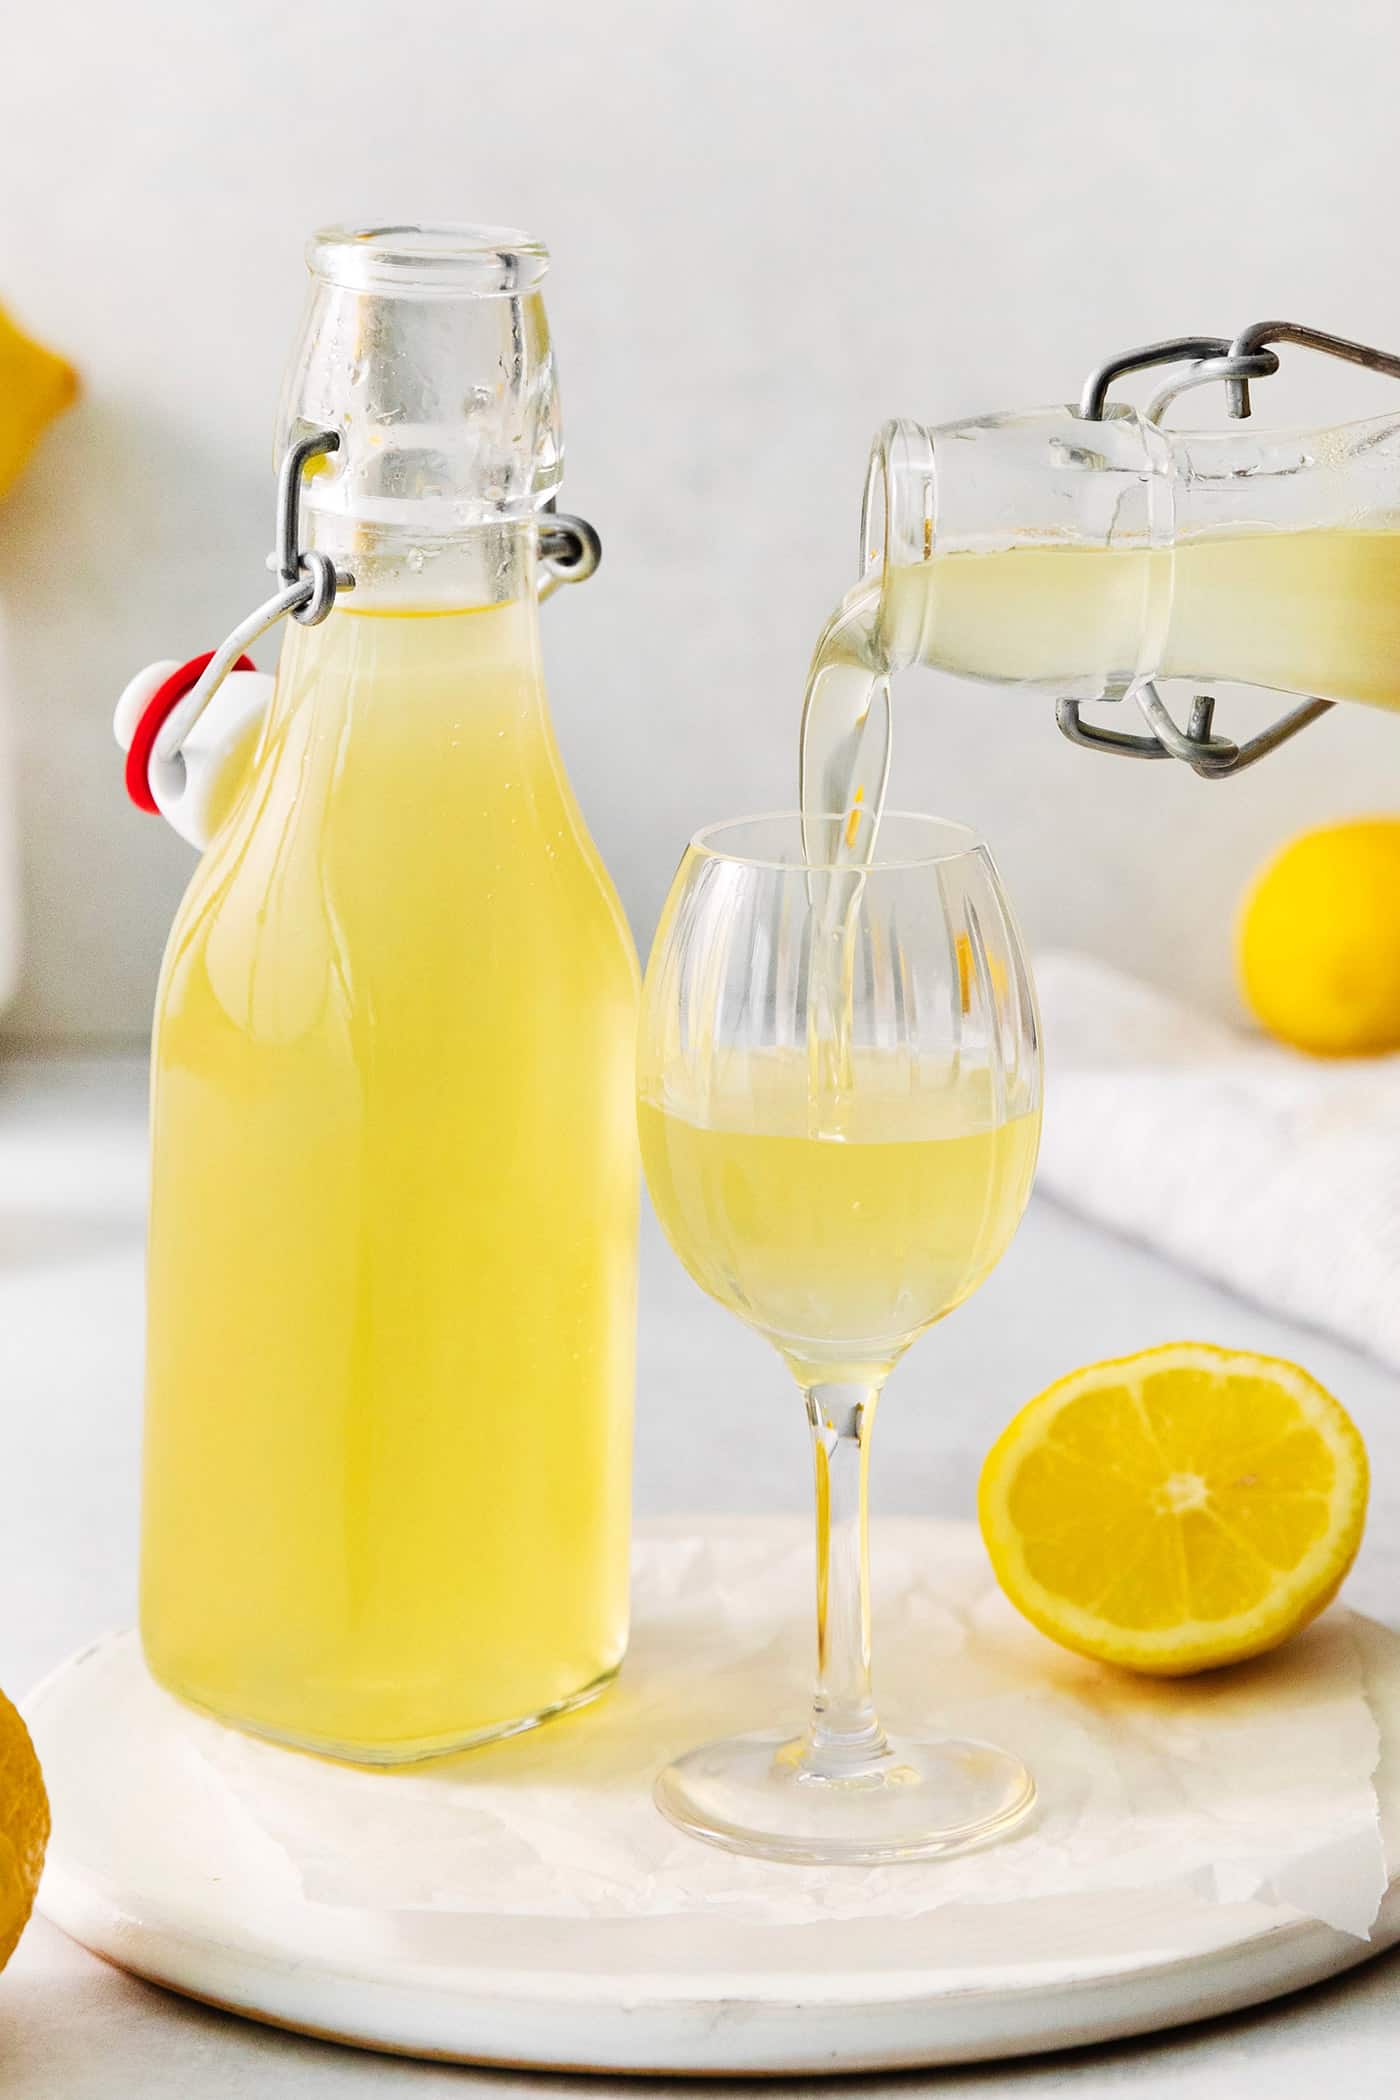 A bottle of limoncello next to a glass of limoncello.